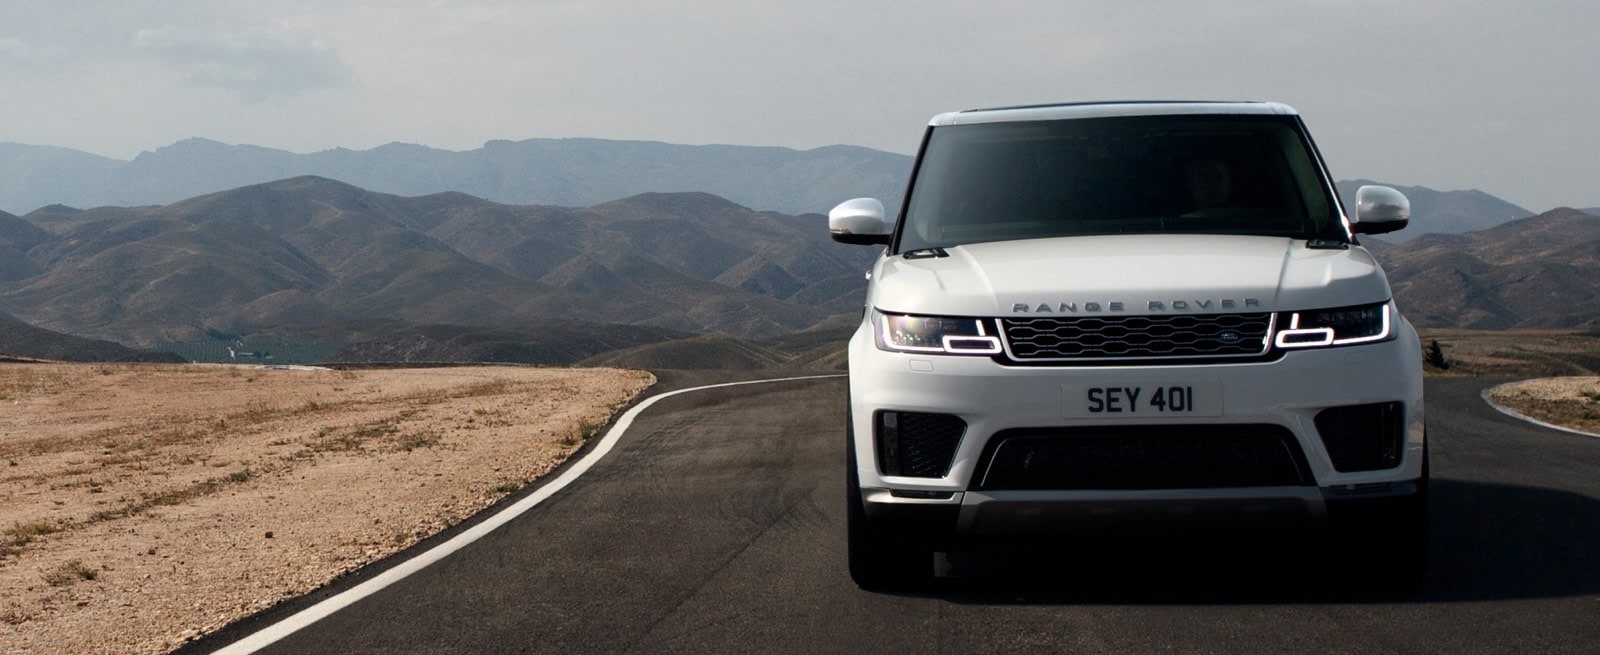 White Range Rover Sport Driving Through A Desert Road